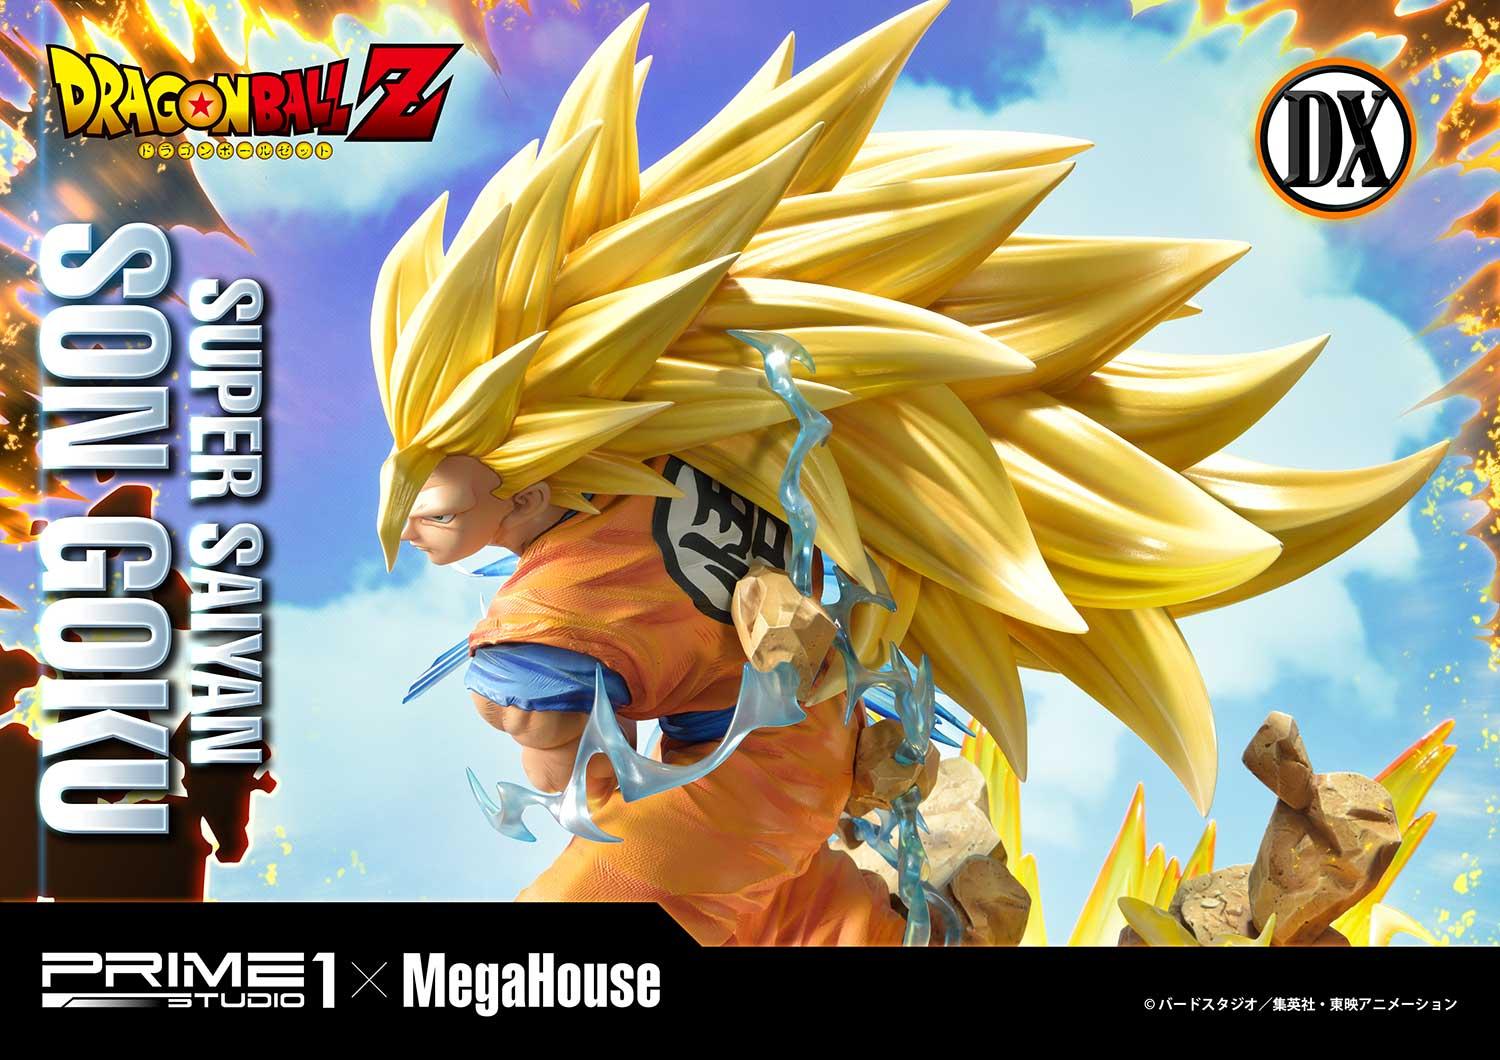 New Luxury Version Anime Cartoon Figure Dragon Ball Cards Legends Super  Saiyan Son Goku 3D Flash